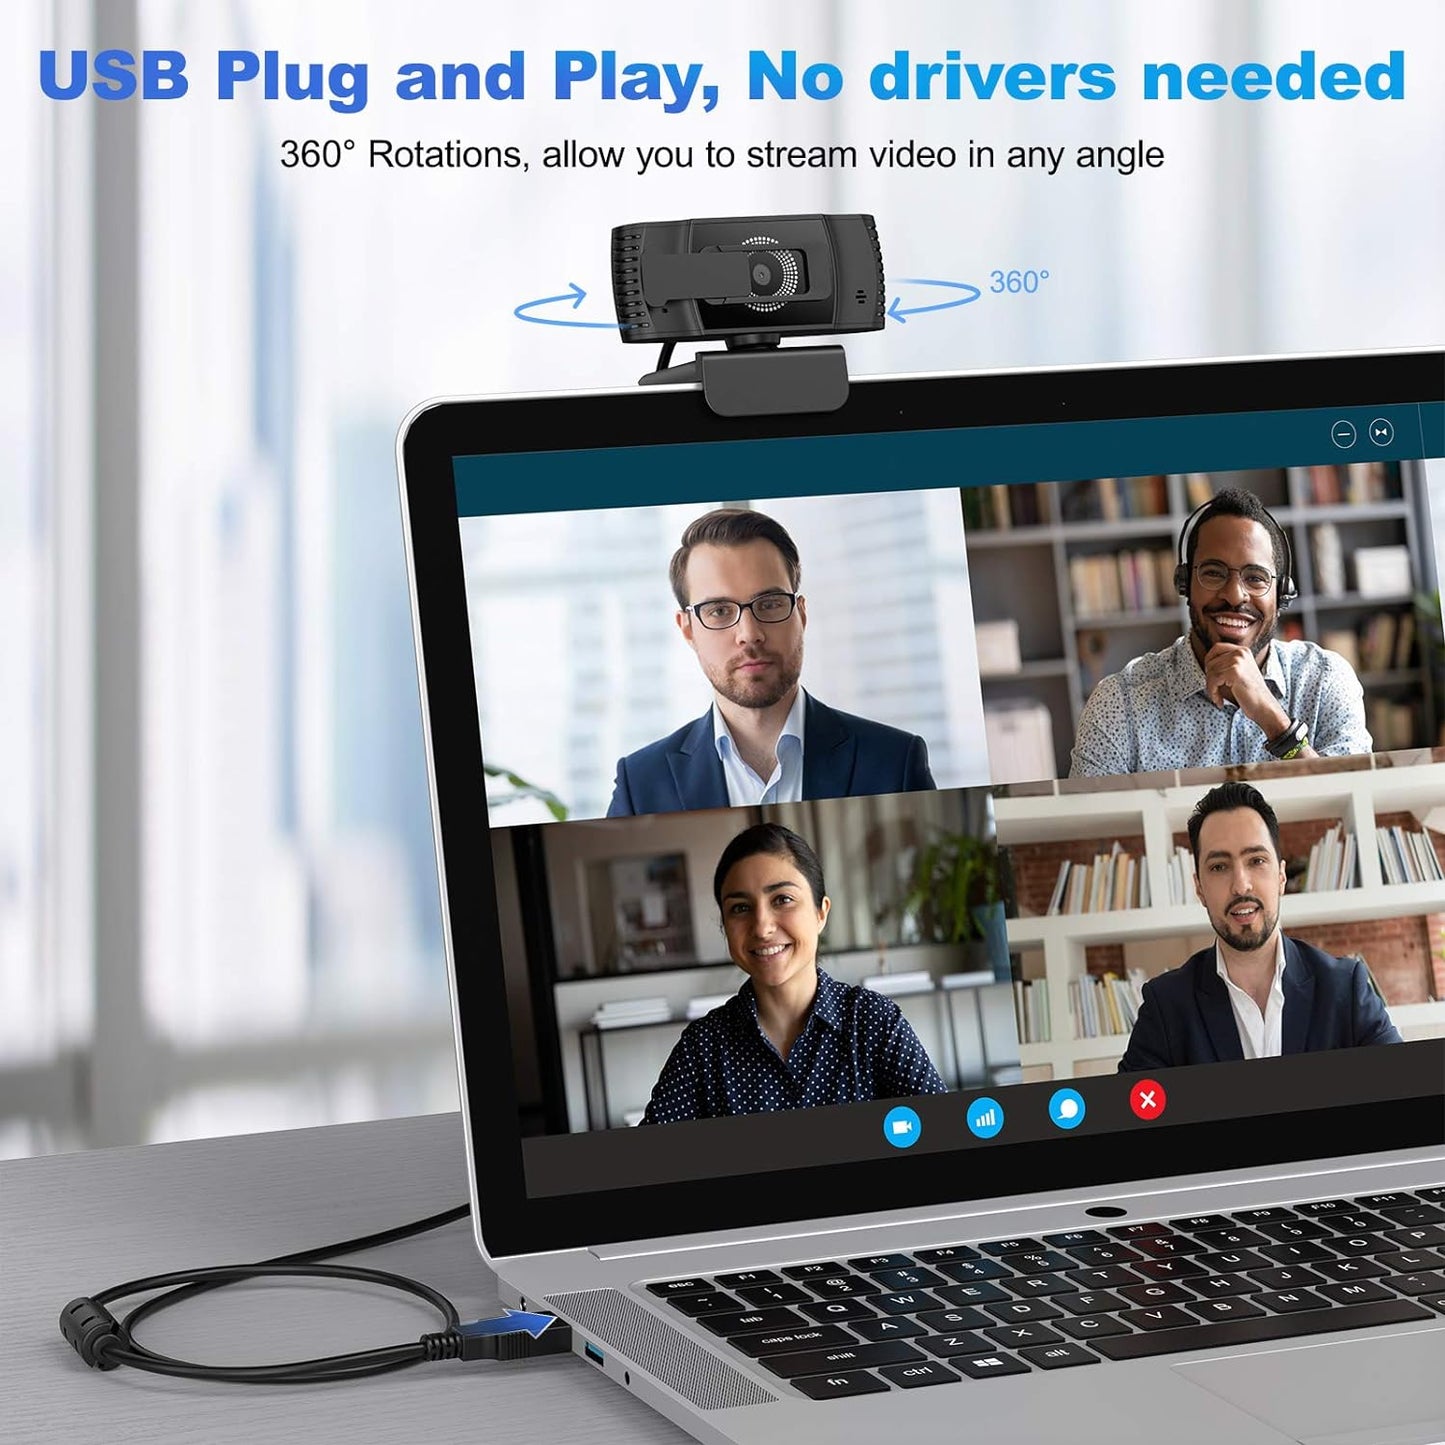 Wansview Model 106JD 1080p Auto Focus Webcam USB 2.0